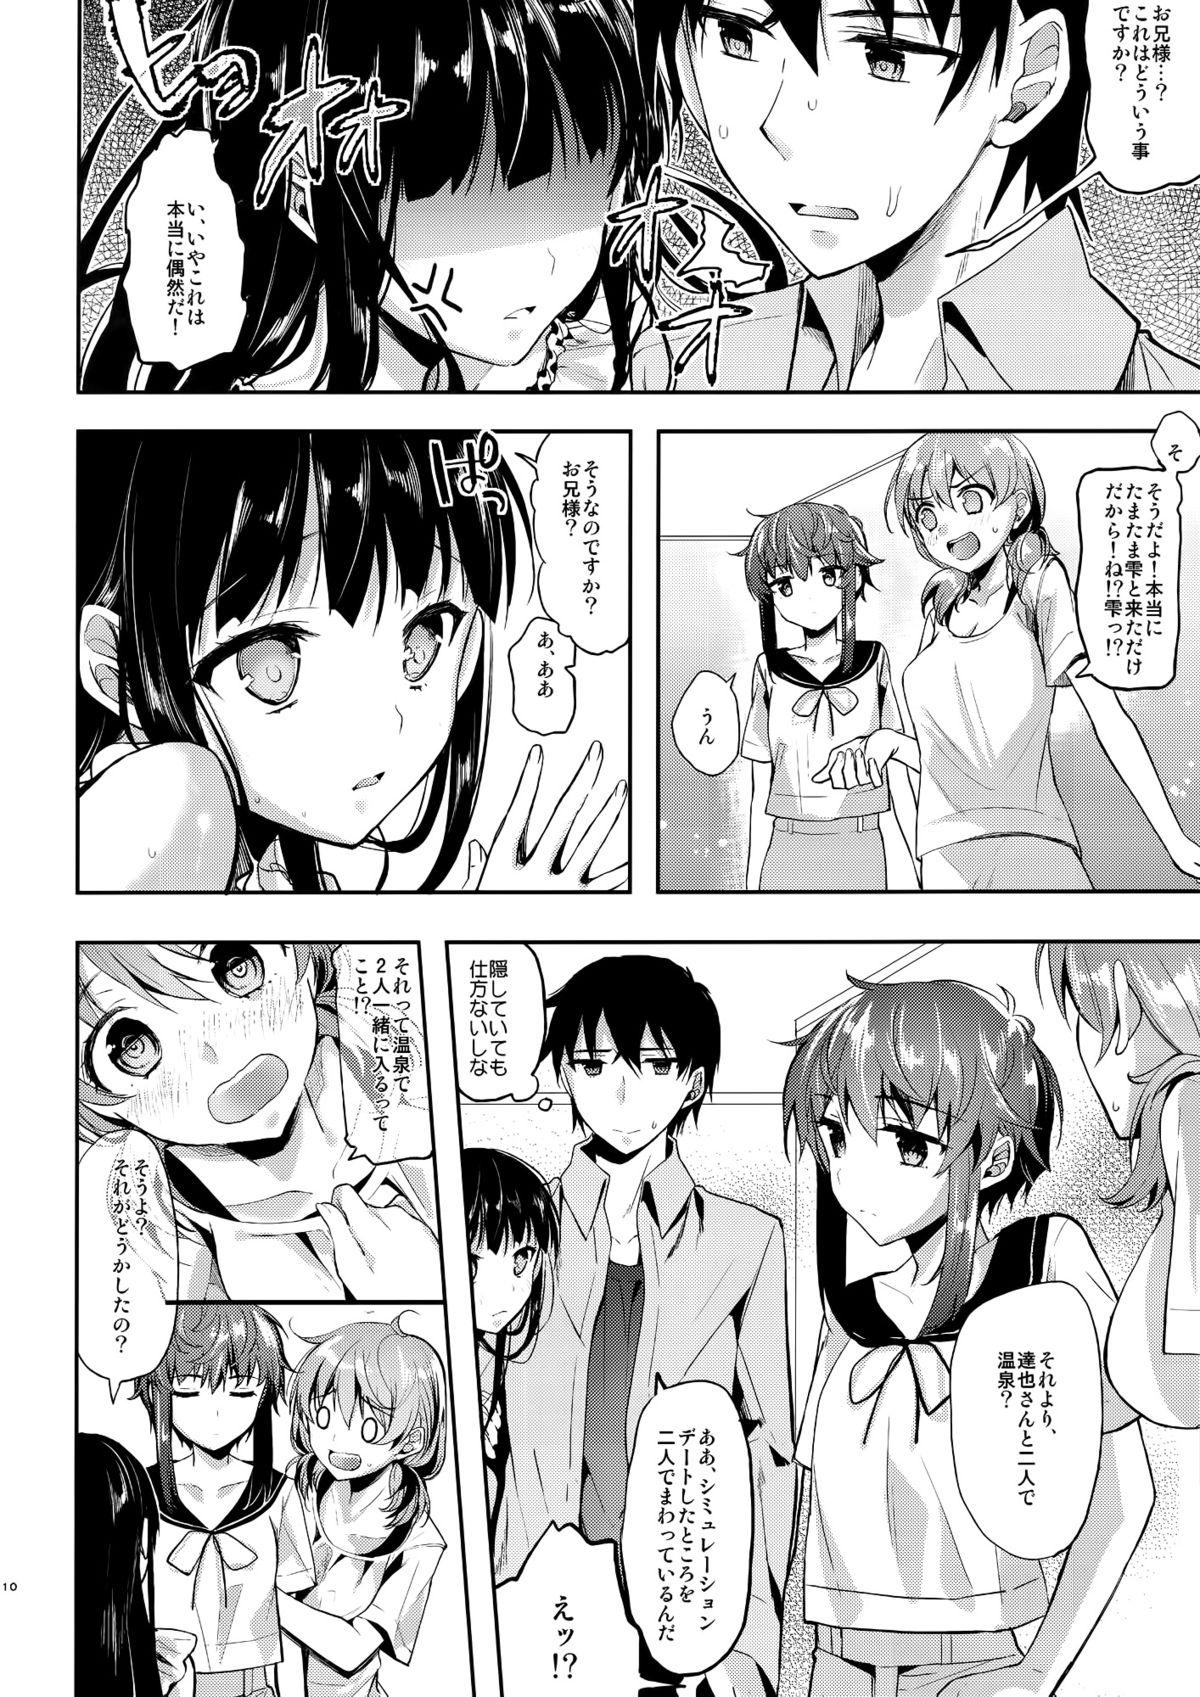 Ex Girlfriends Deep Snow 7 - Mahouka koukou no rettousei This - Page 7